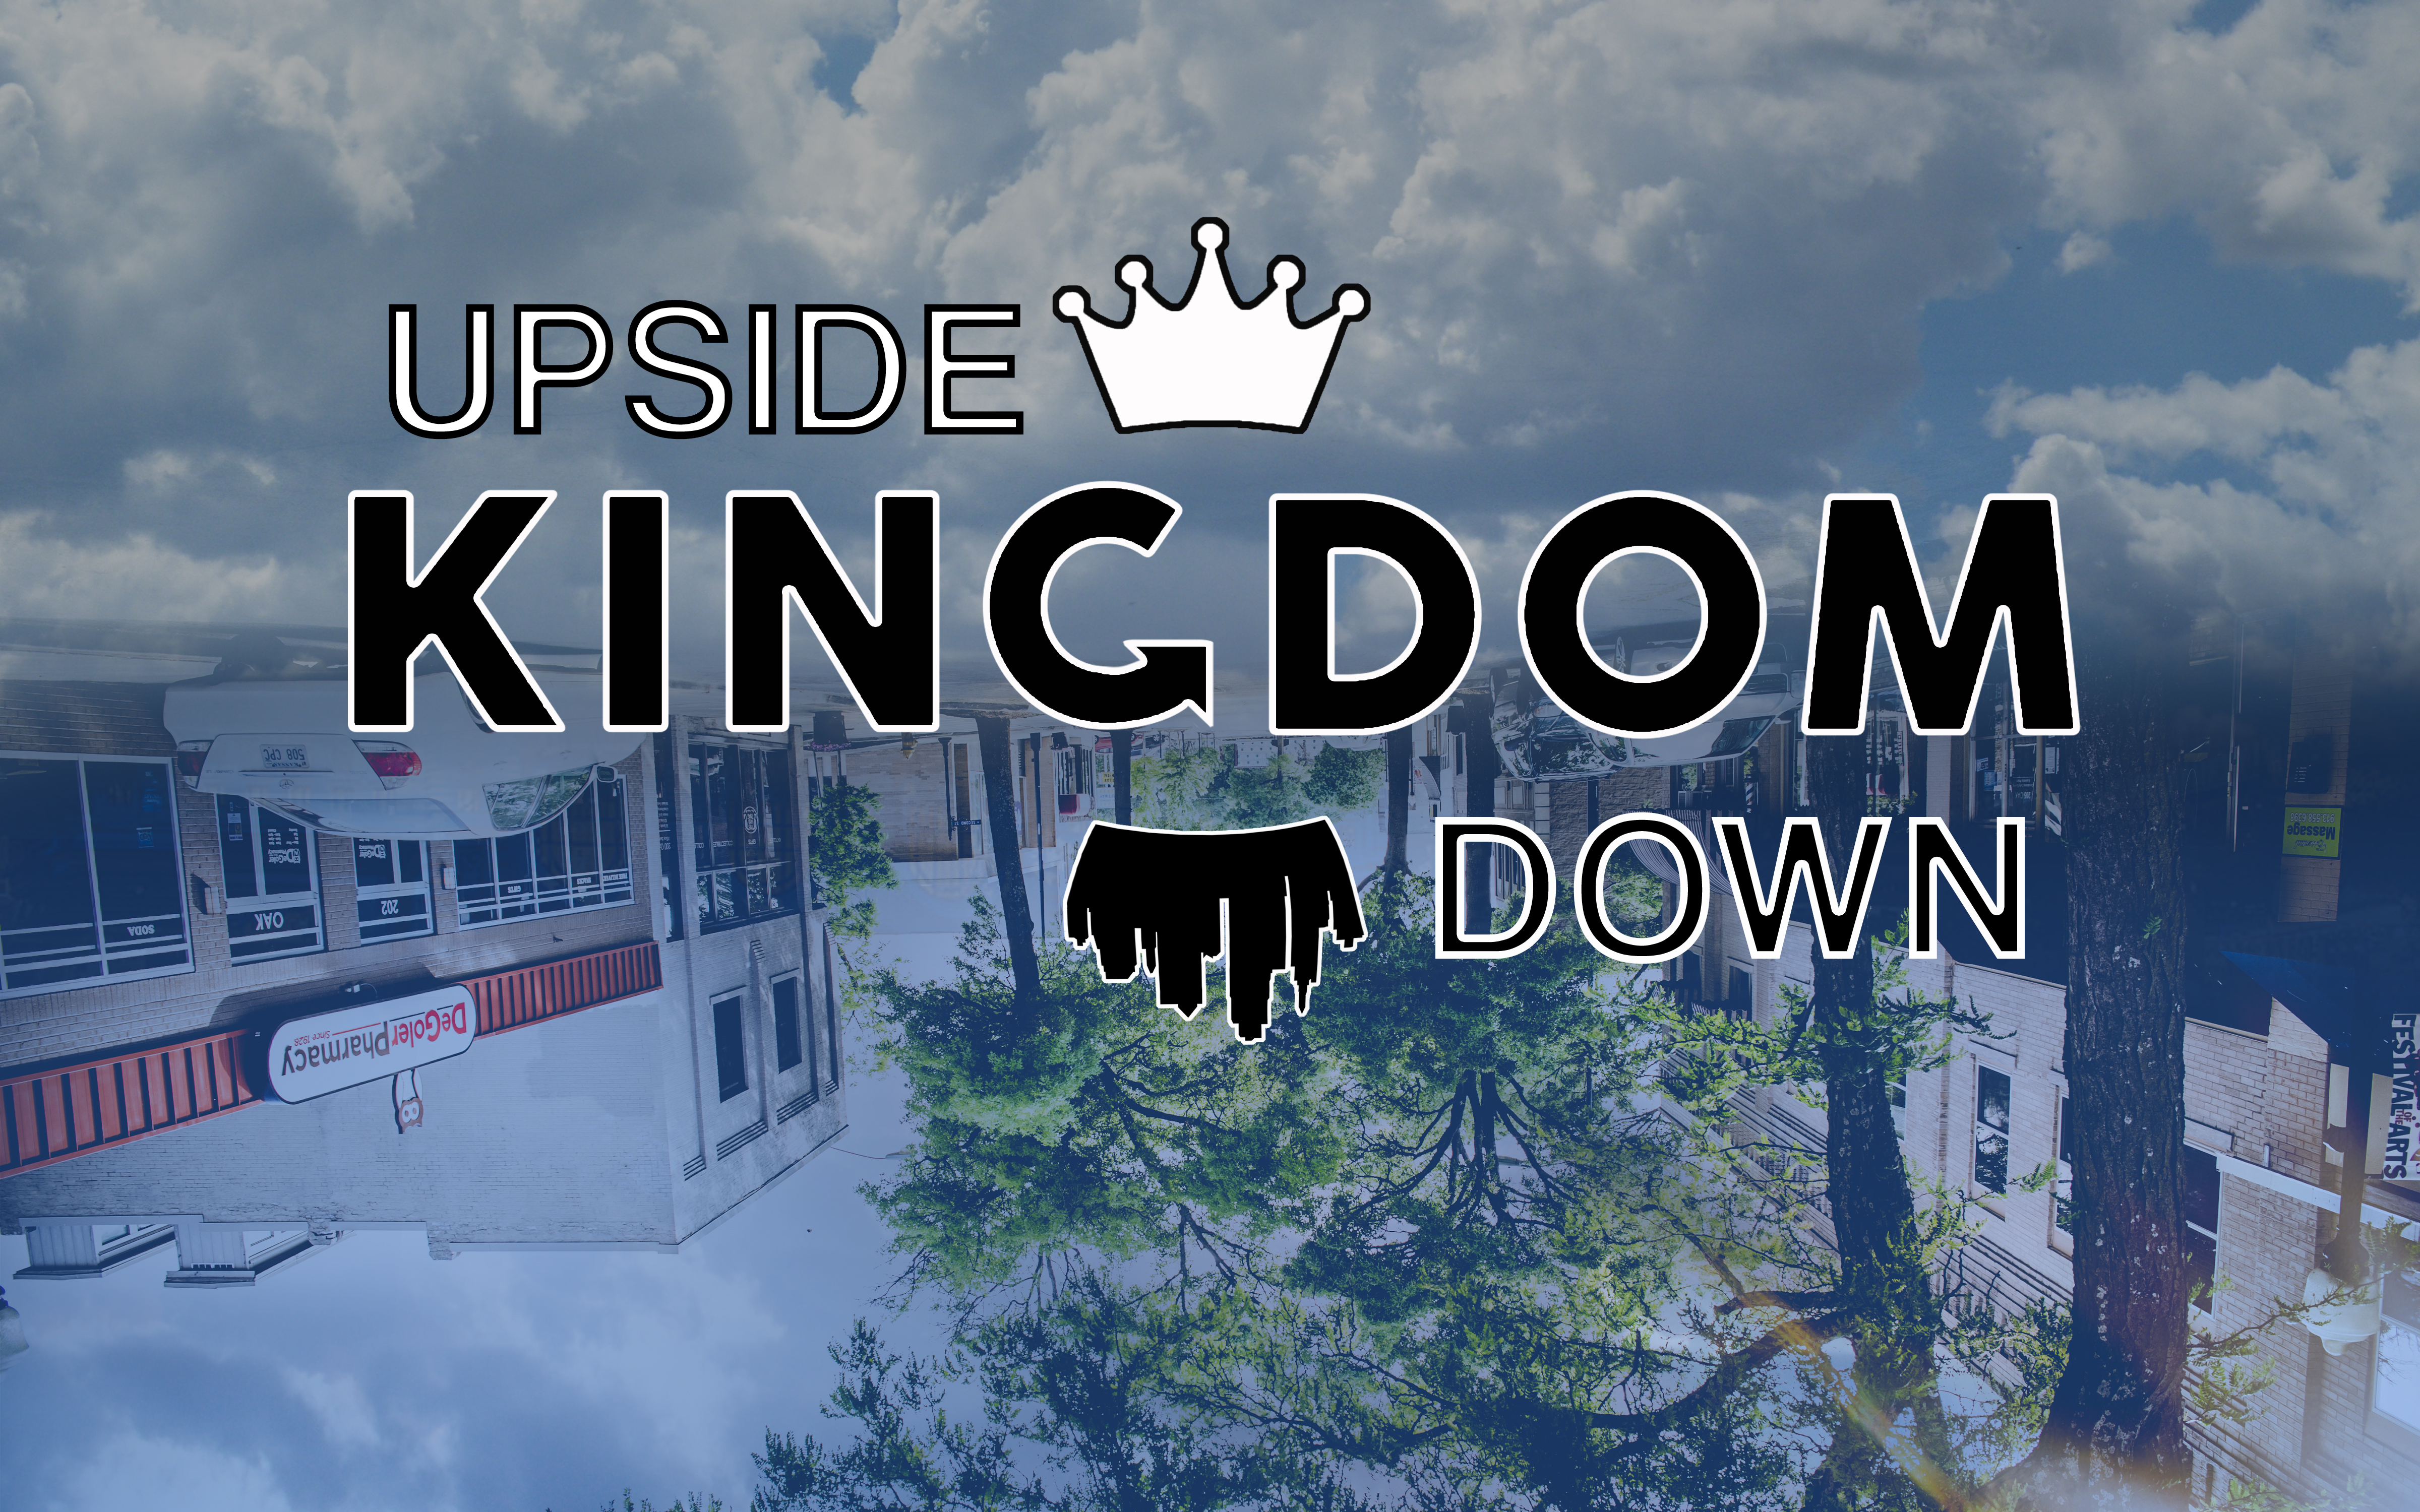 Upside Down Kingdom banner